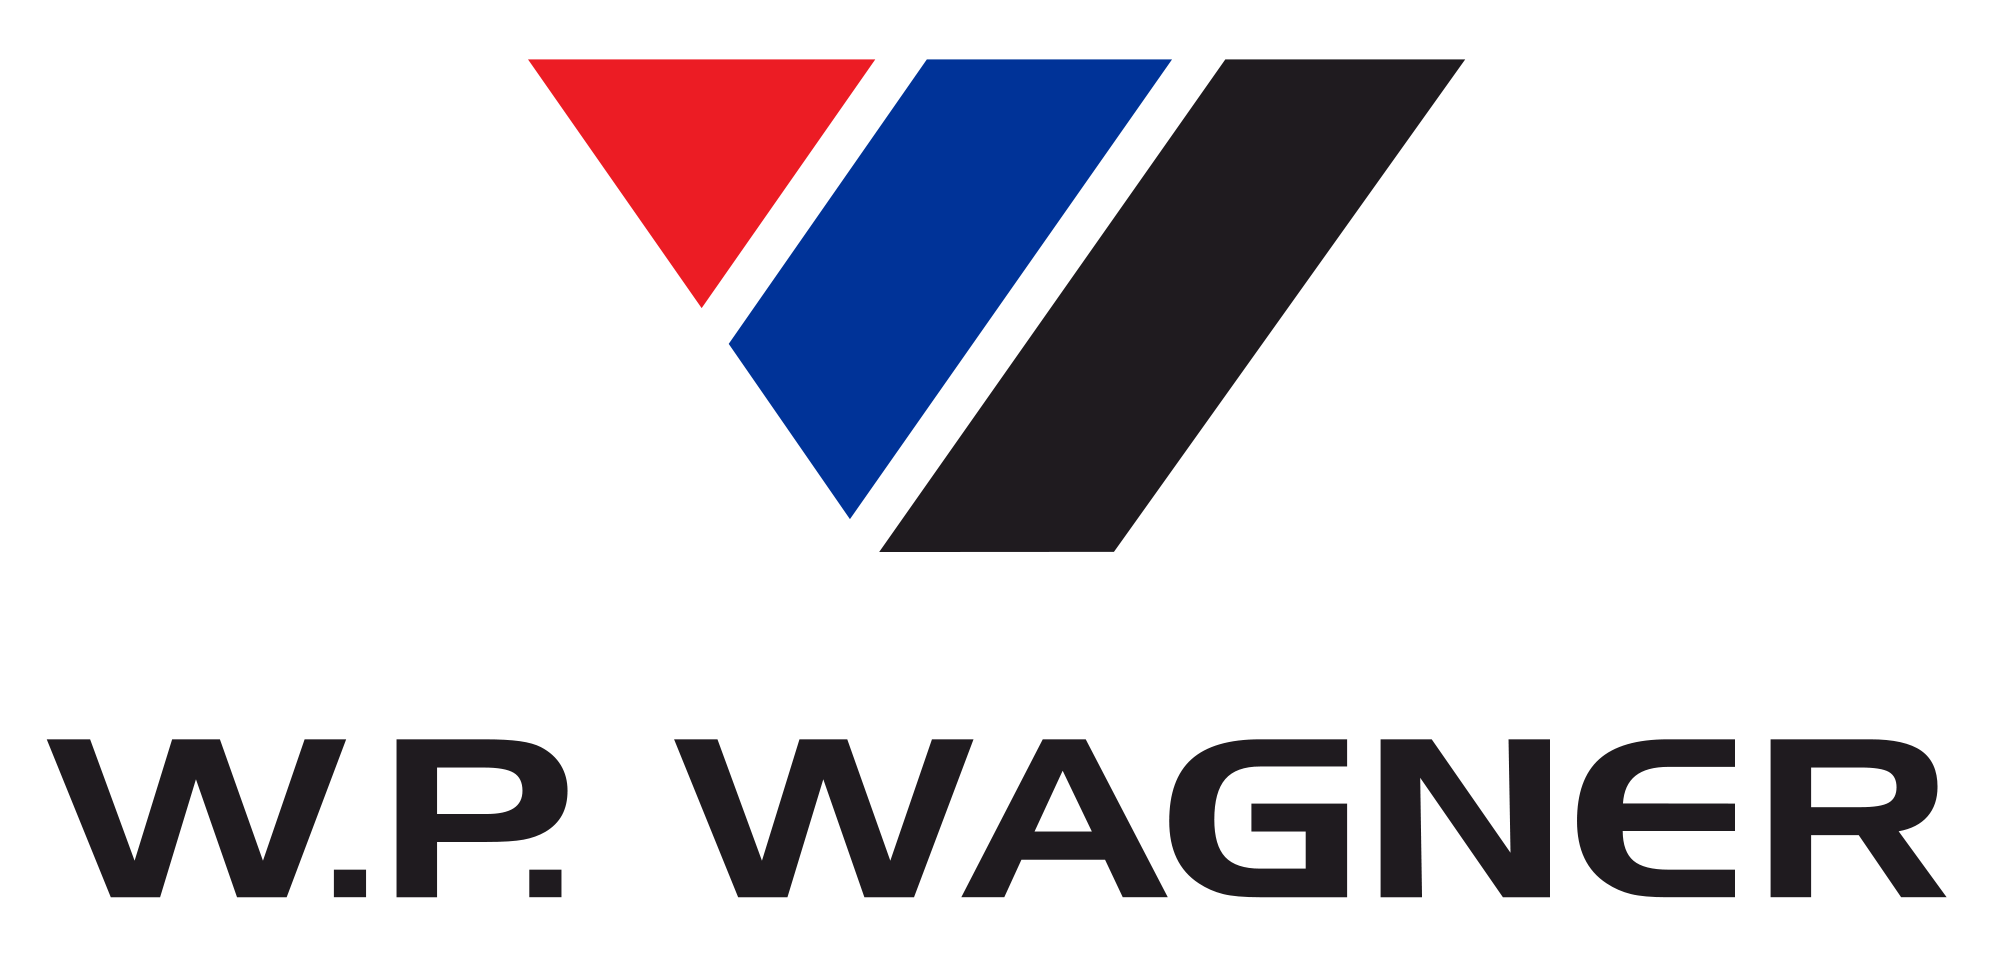 Wagner Logo - W P Wagner High School Logo.svg